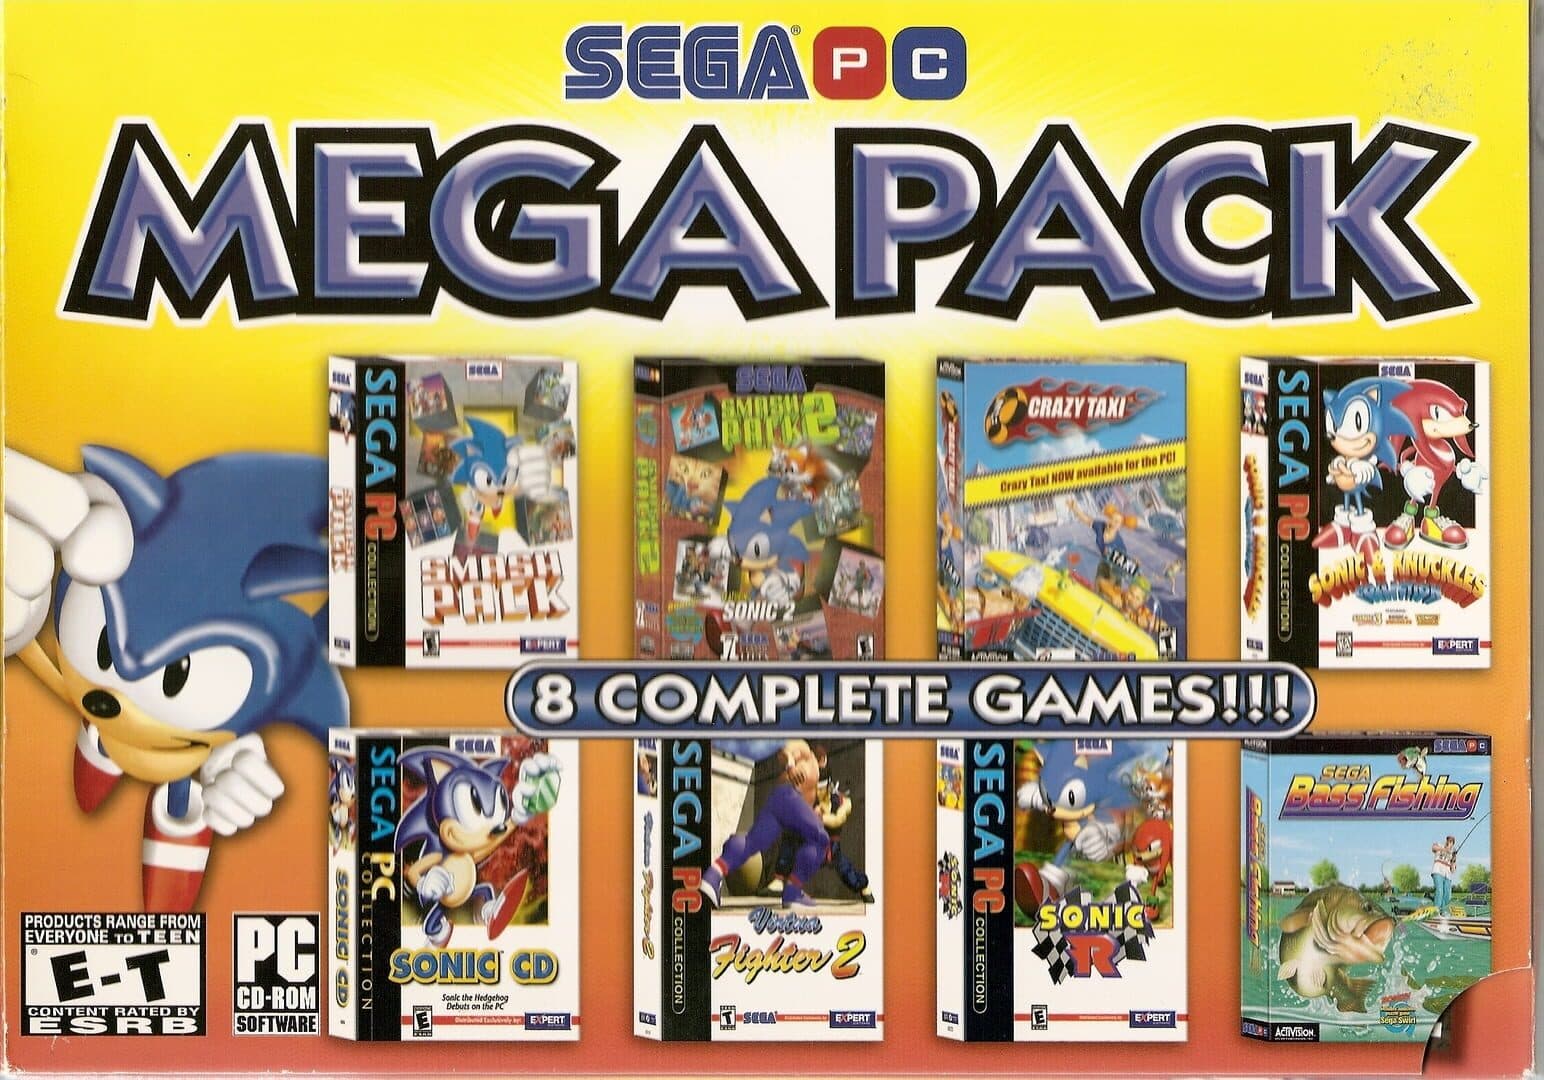 Sega Mega Pack Image